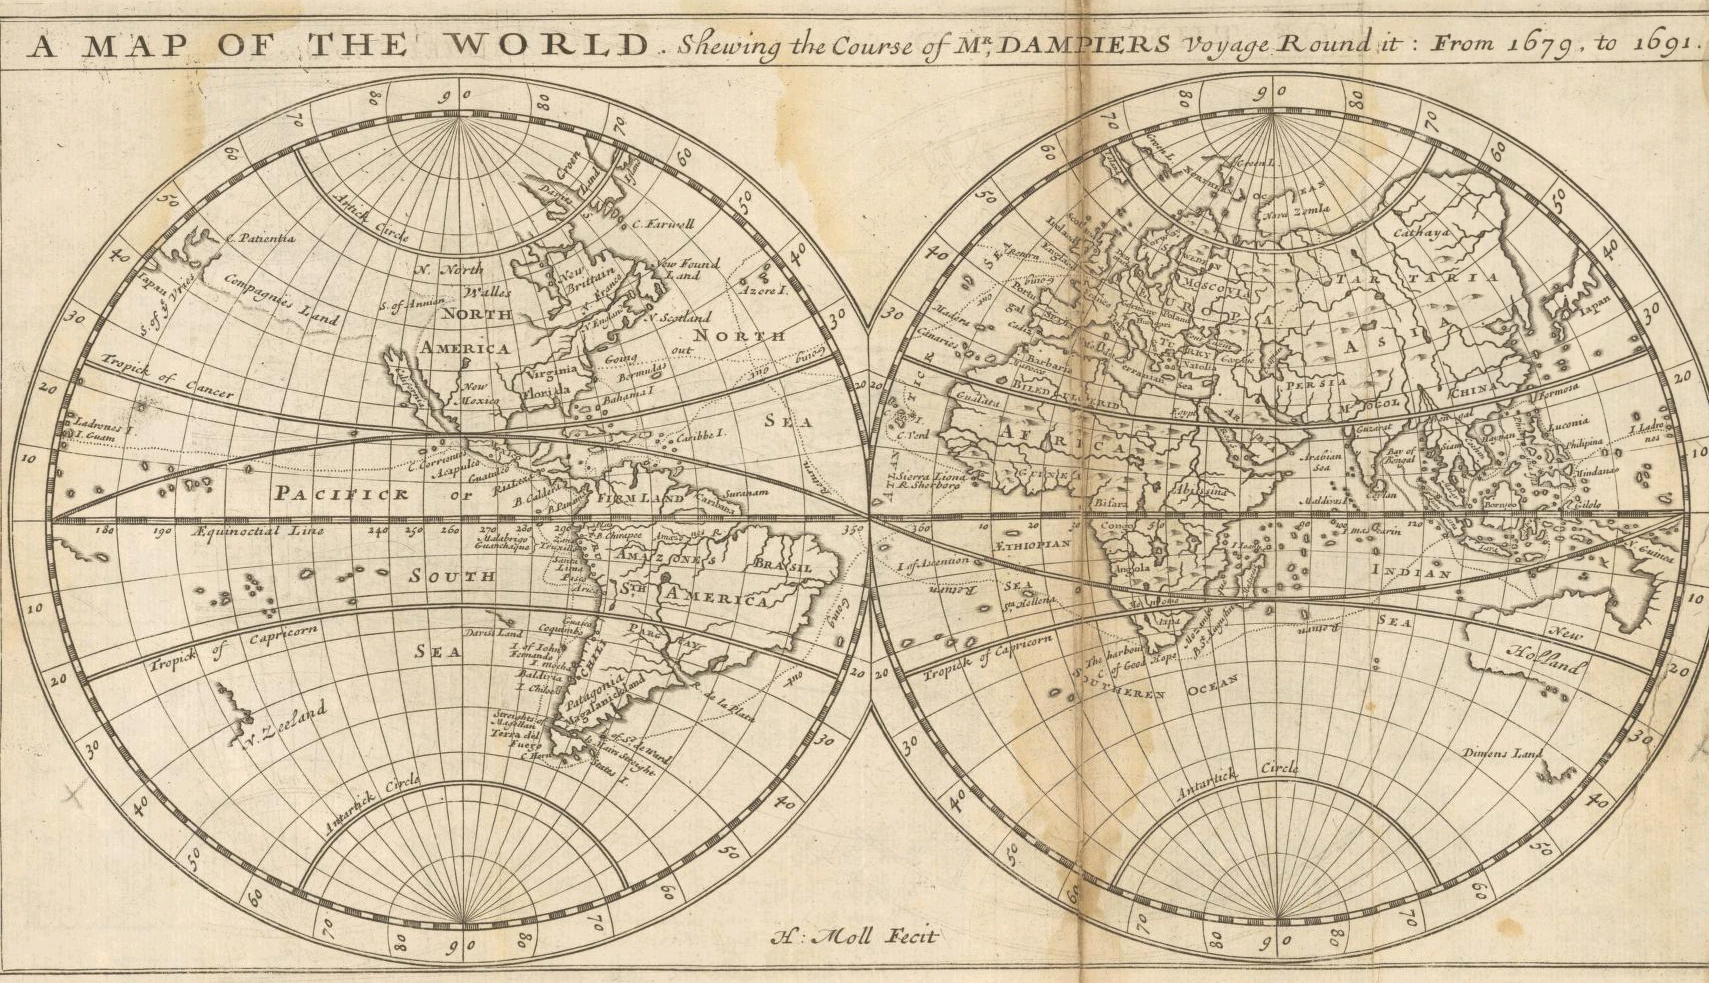 World Map Round